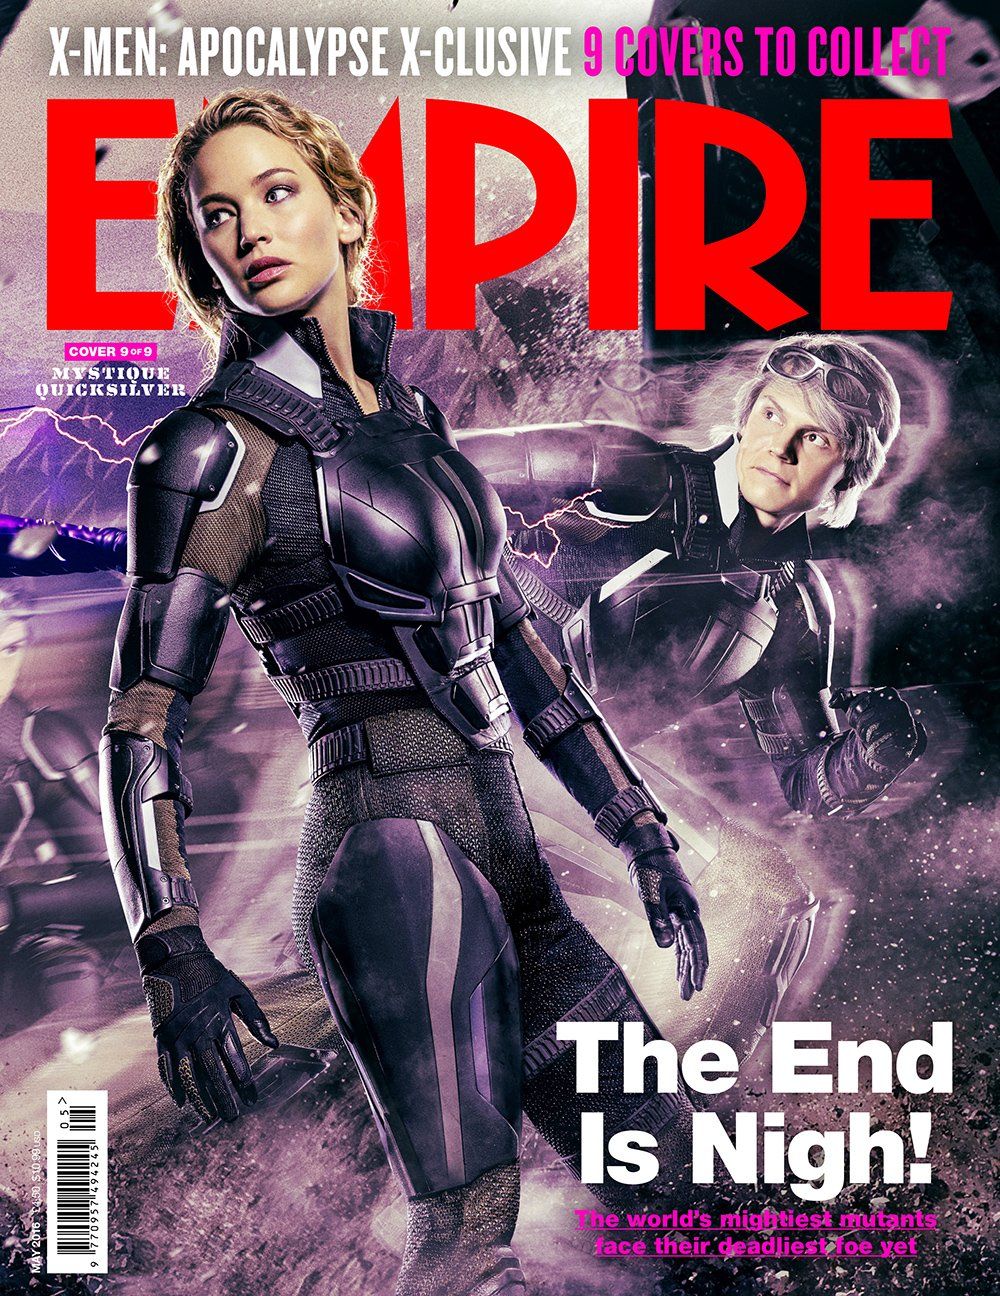 X-Men: Apocalypse magazine cover - Mystique and Quicksilver